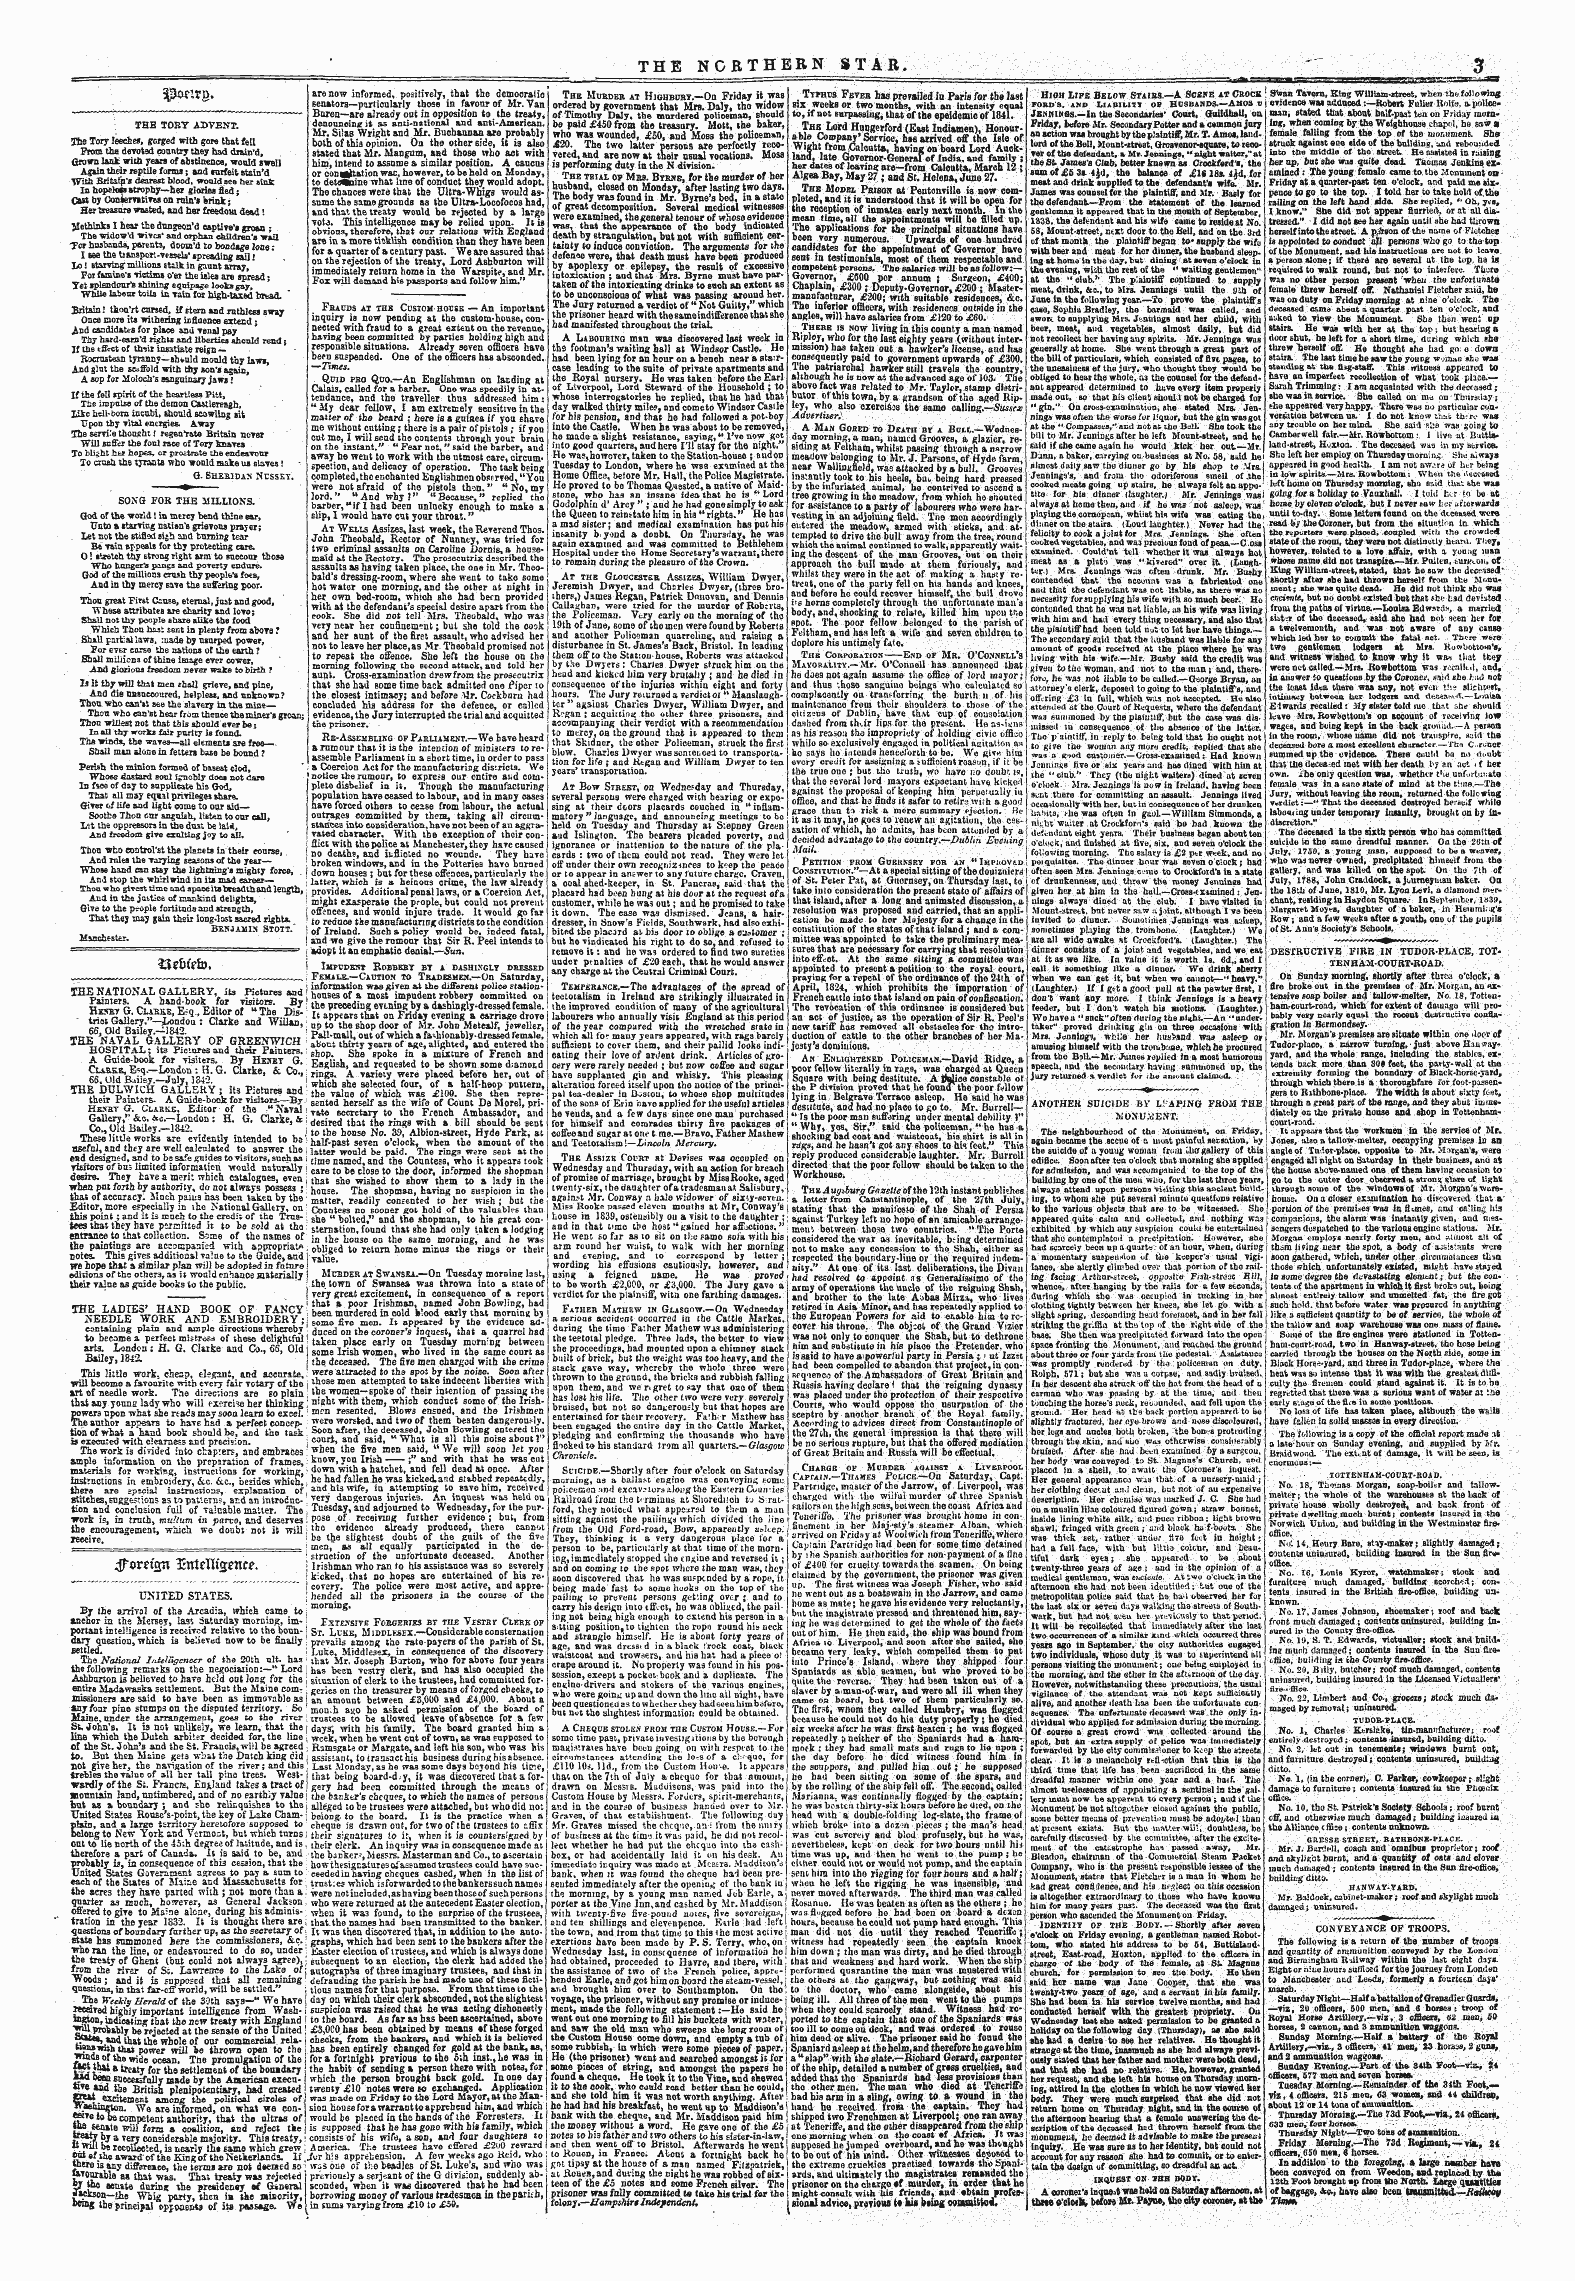 Northern Star (1837-1852): jS F Y, 5th edition - ^L^T&Gt;&).